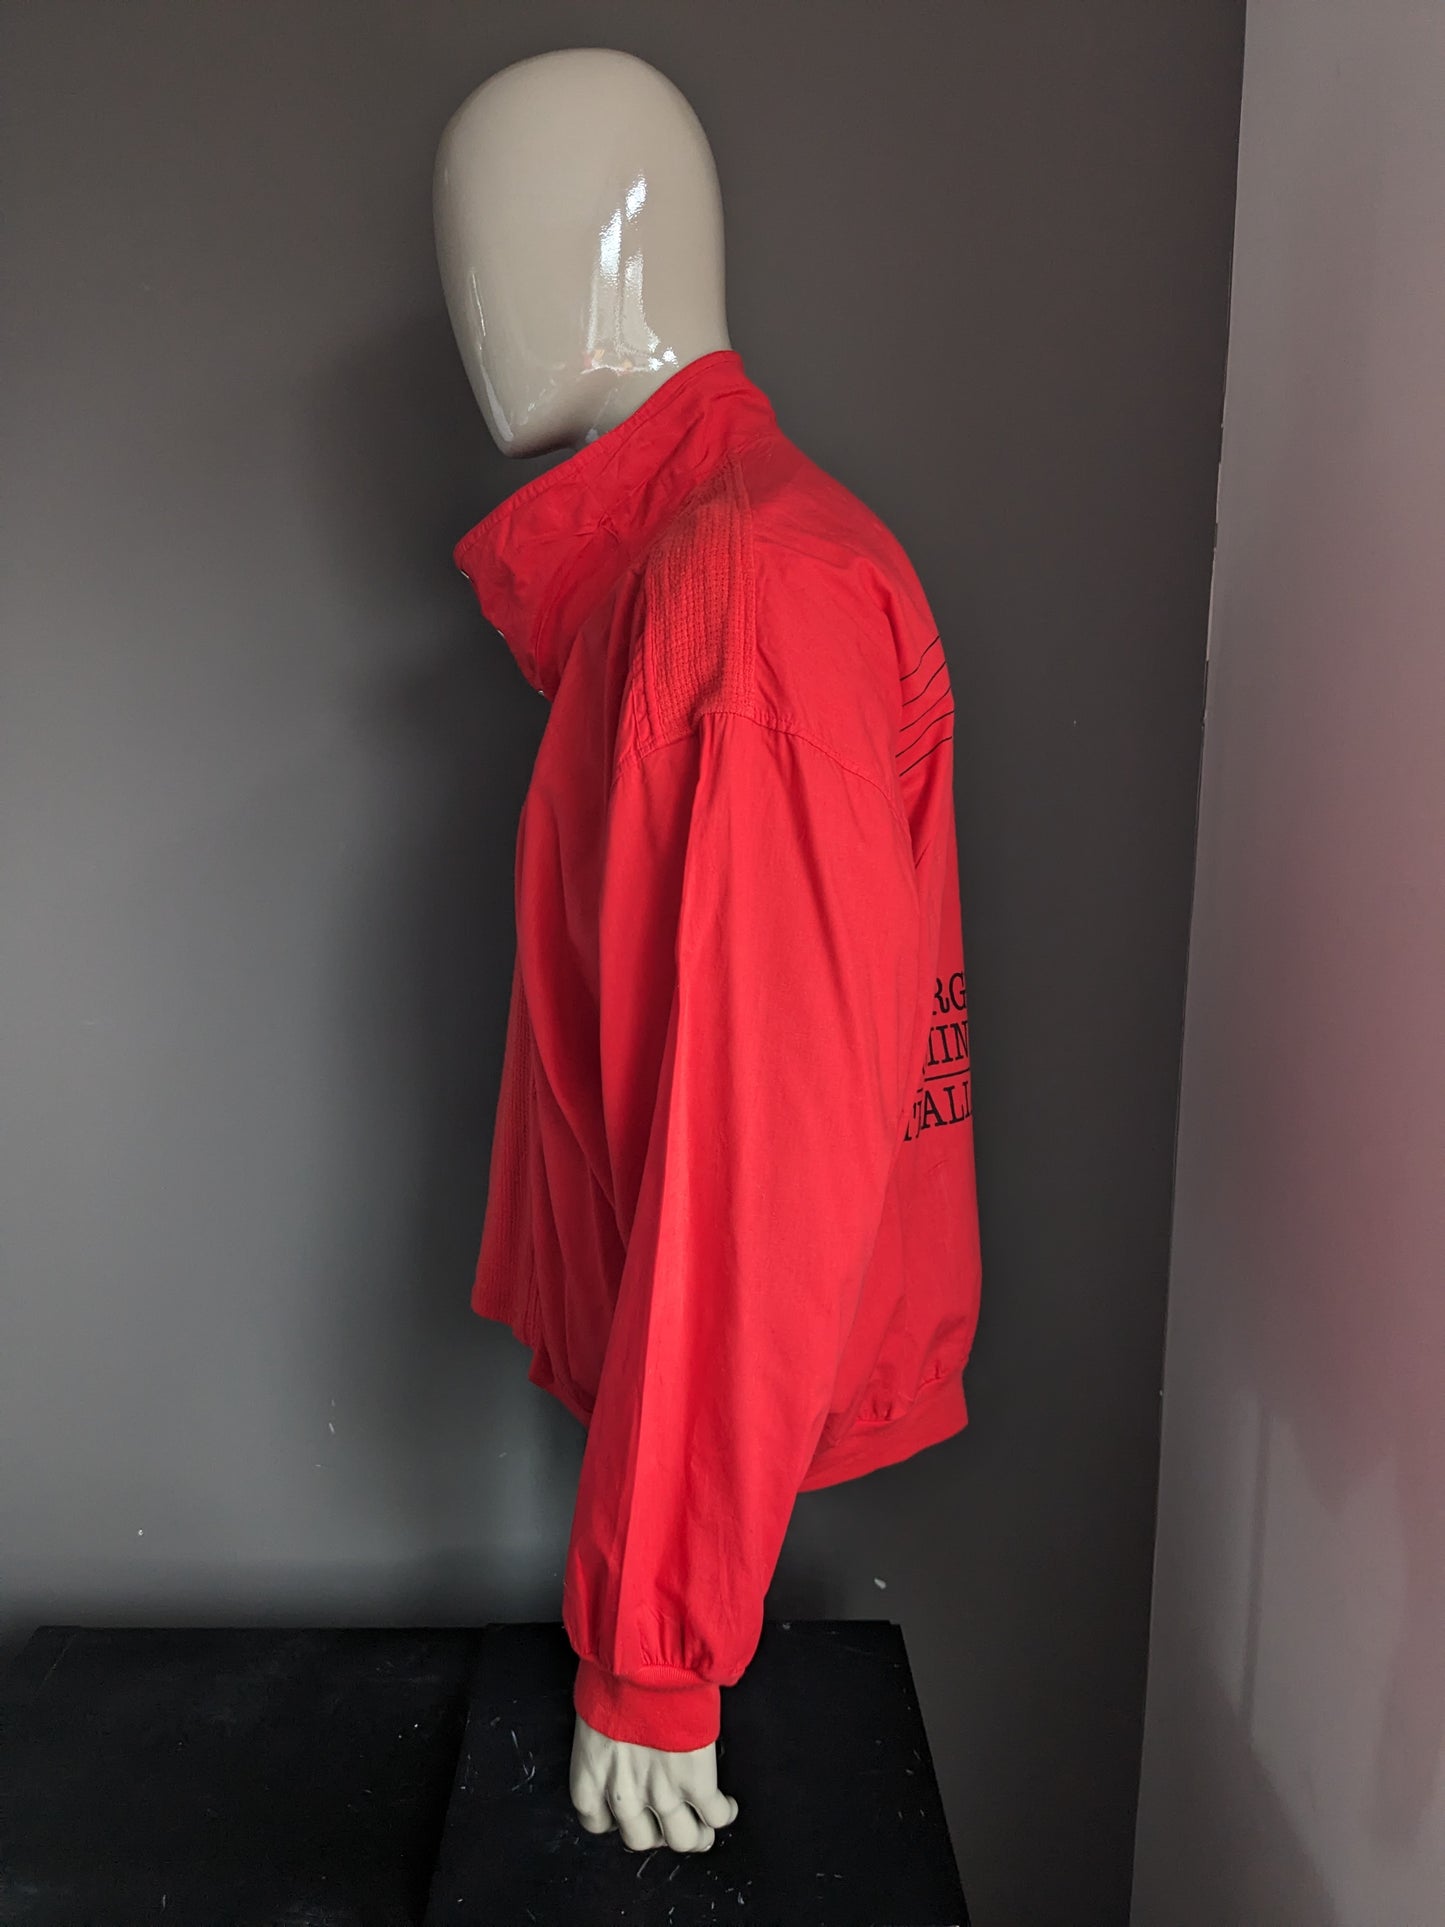 Suéter de polo vintage con banda elástica. Rojo con impresión. Tamaño L / XL.